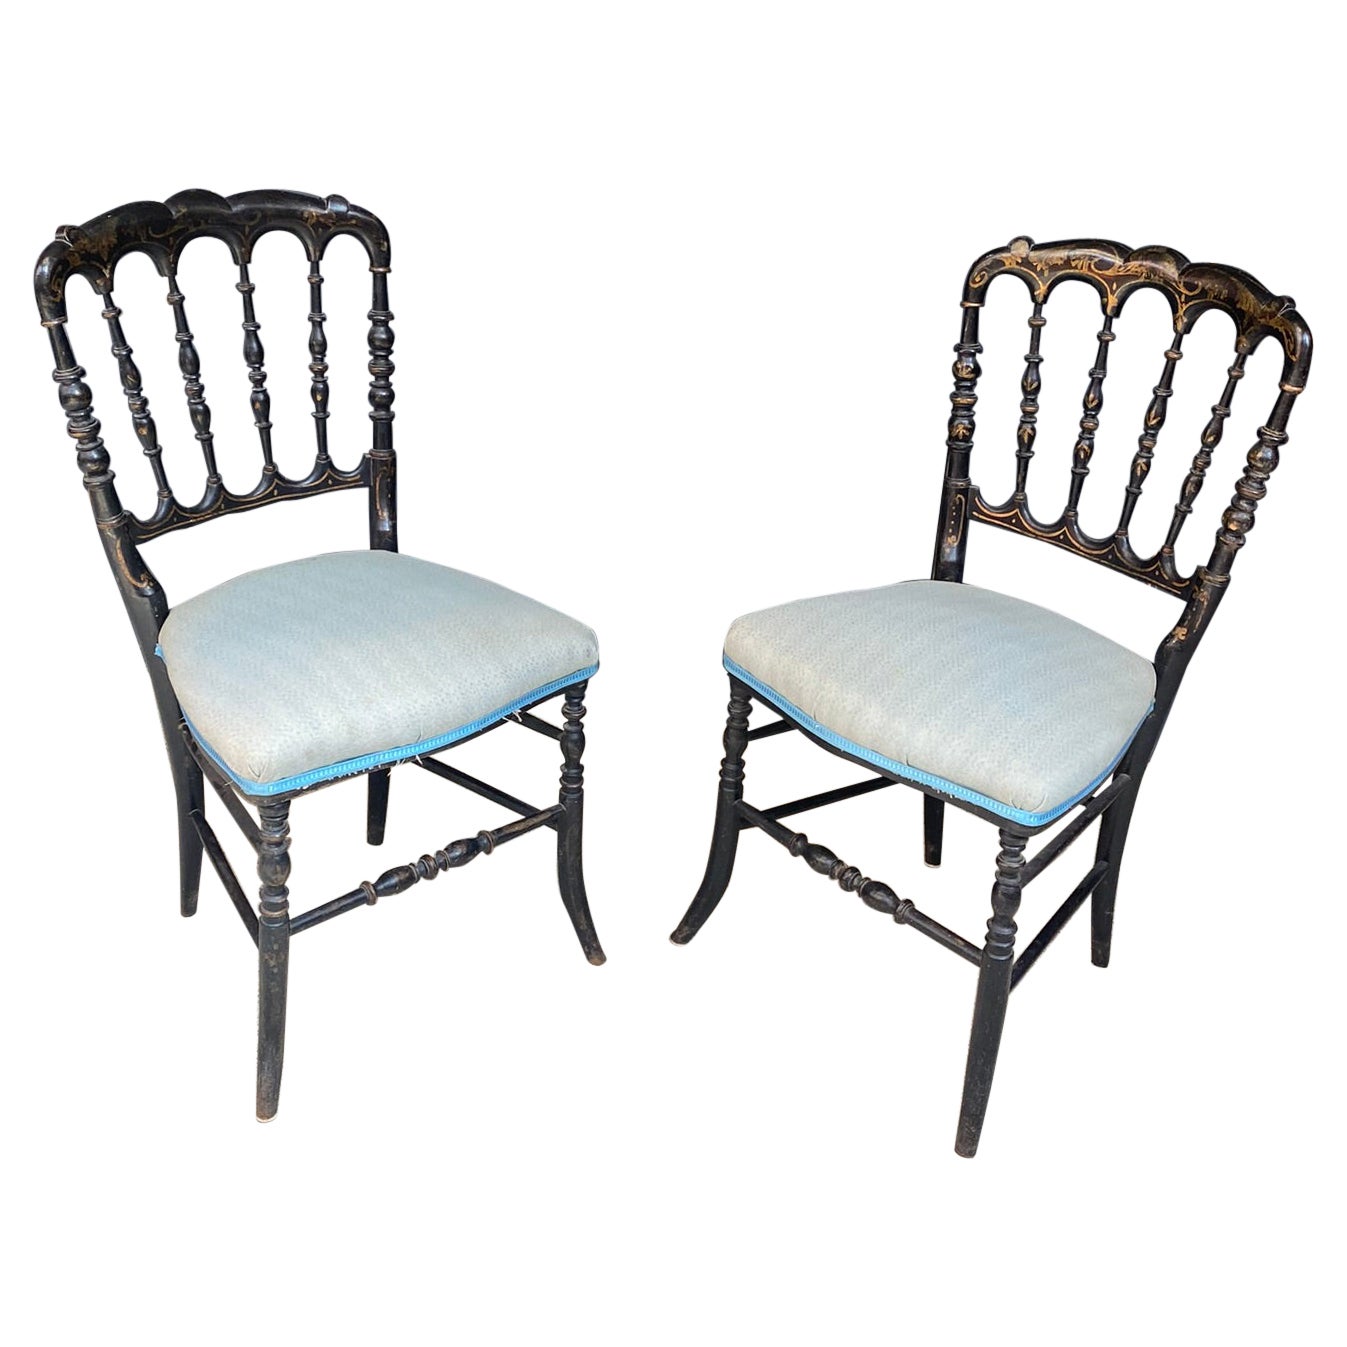 2 Original Chiarivari Napoleon III Ebonized Chairs, France, 1850s For Sale